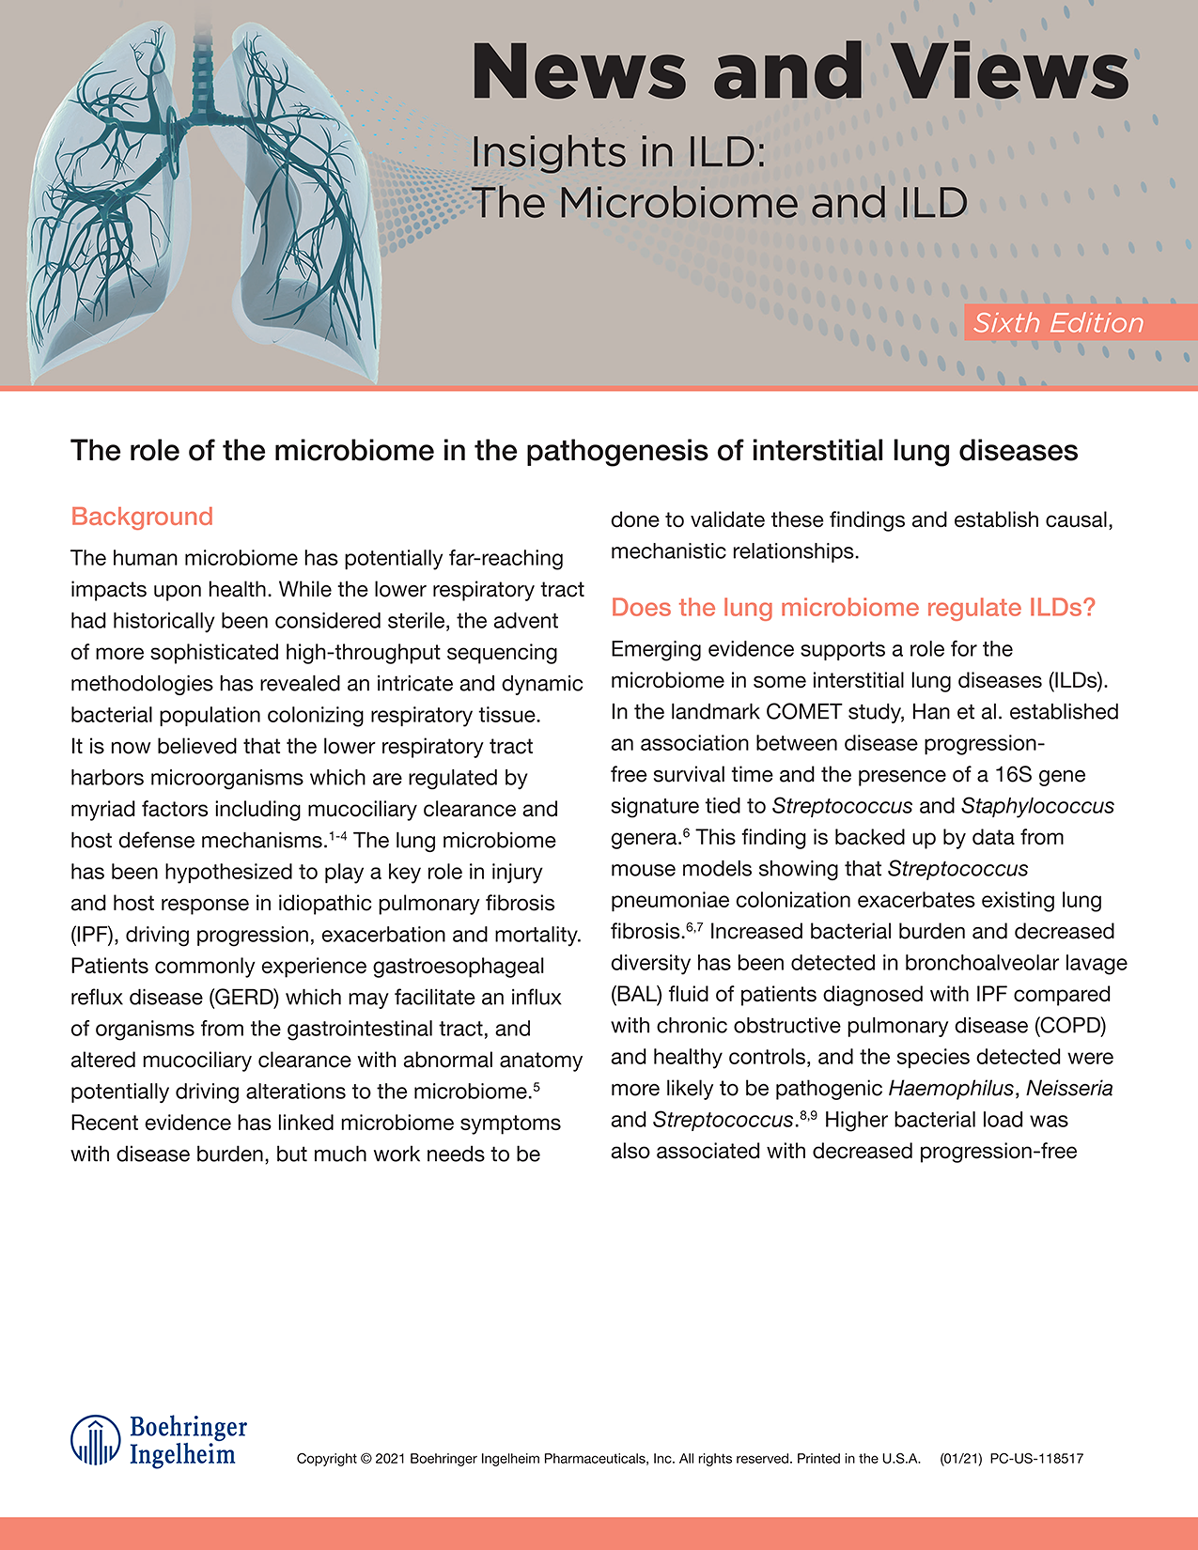 Insights in ILD – the microbiome and ILD